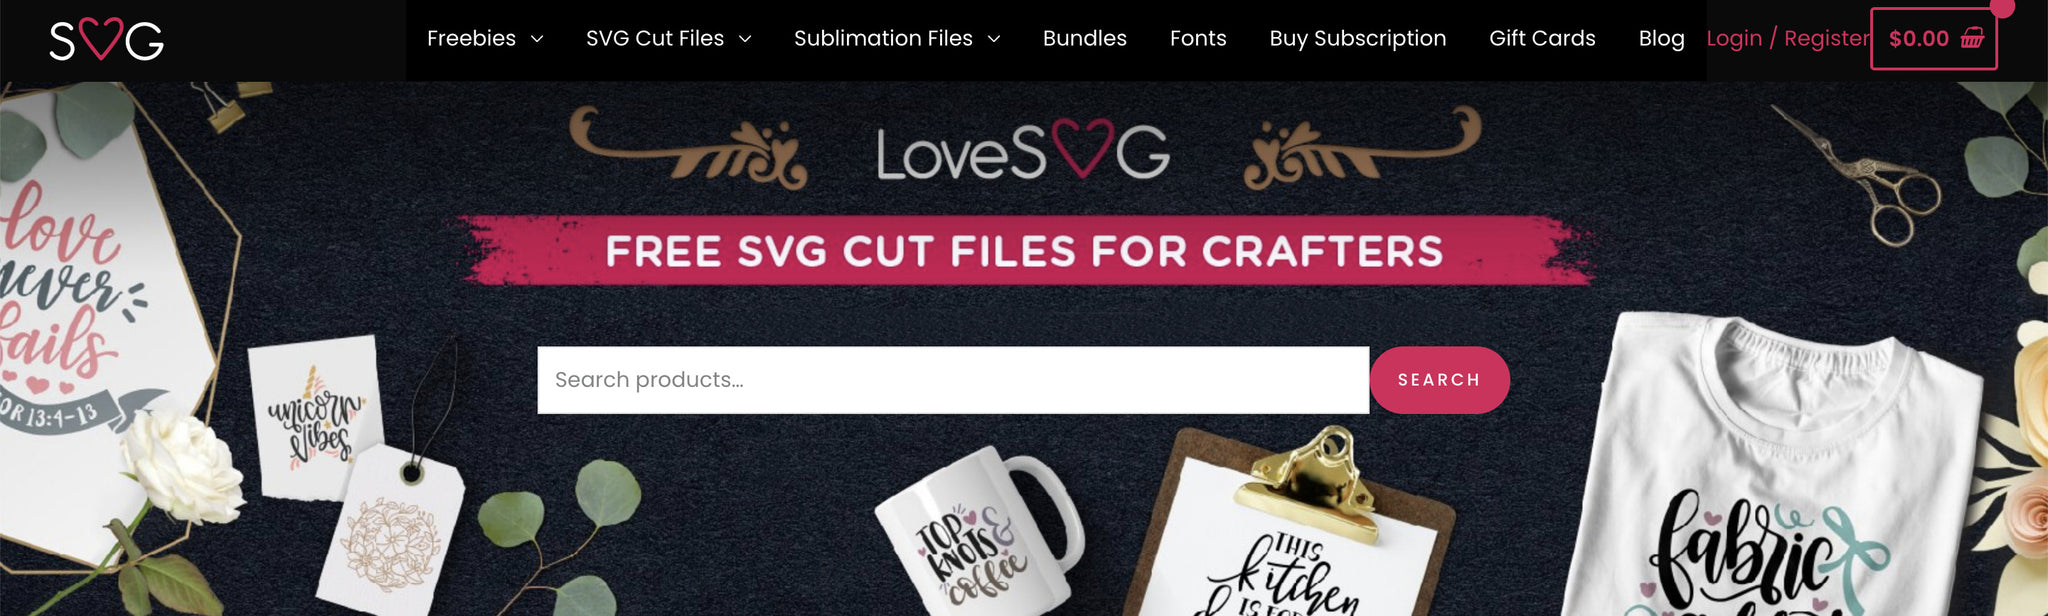 LoveSVG sublimation designs